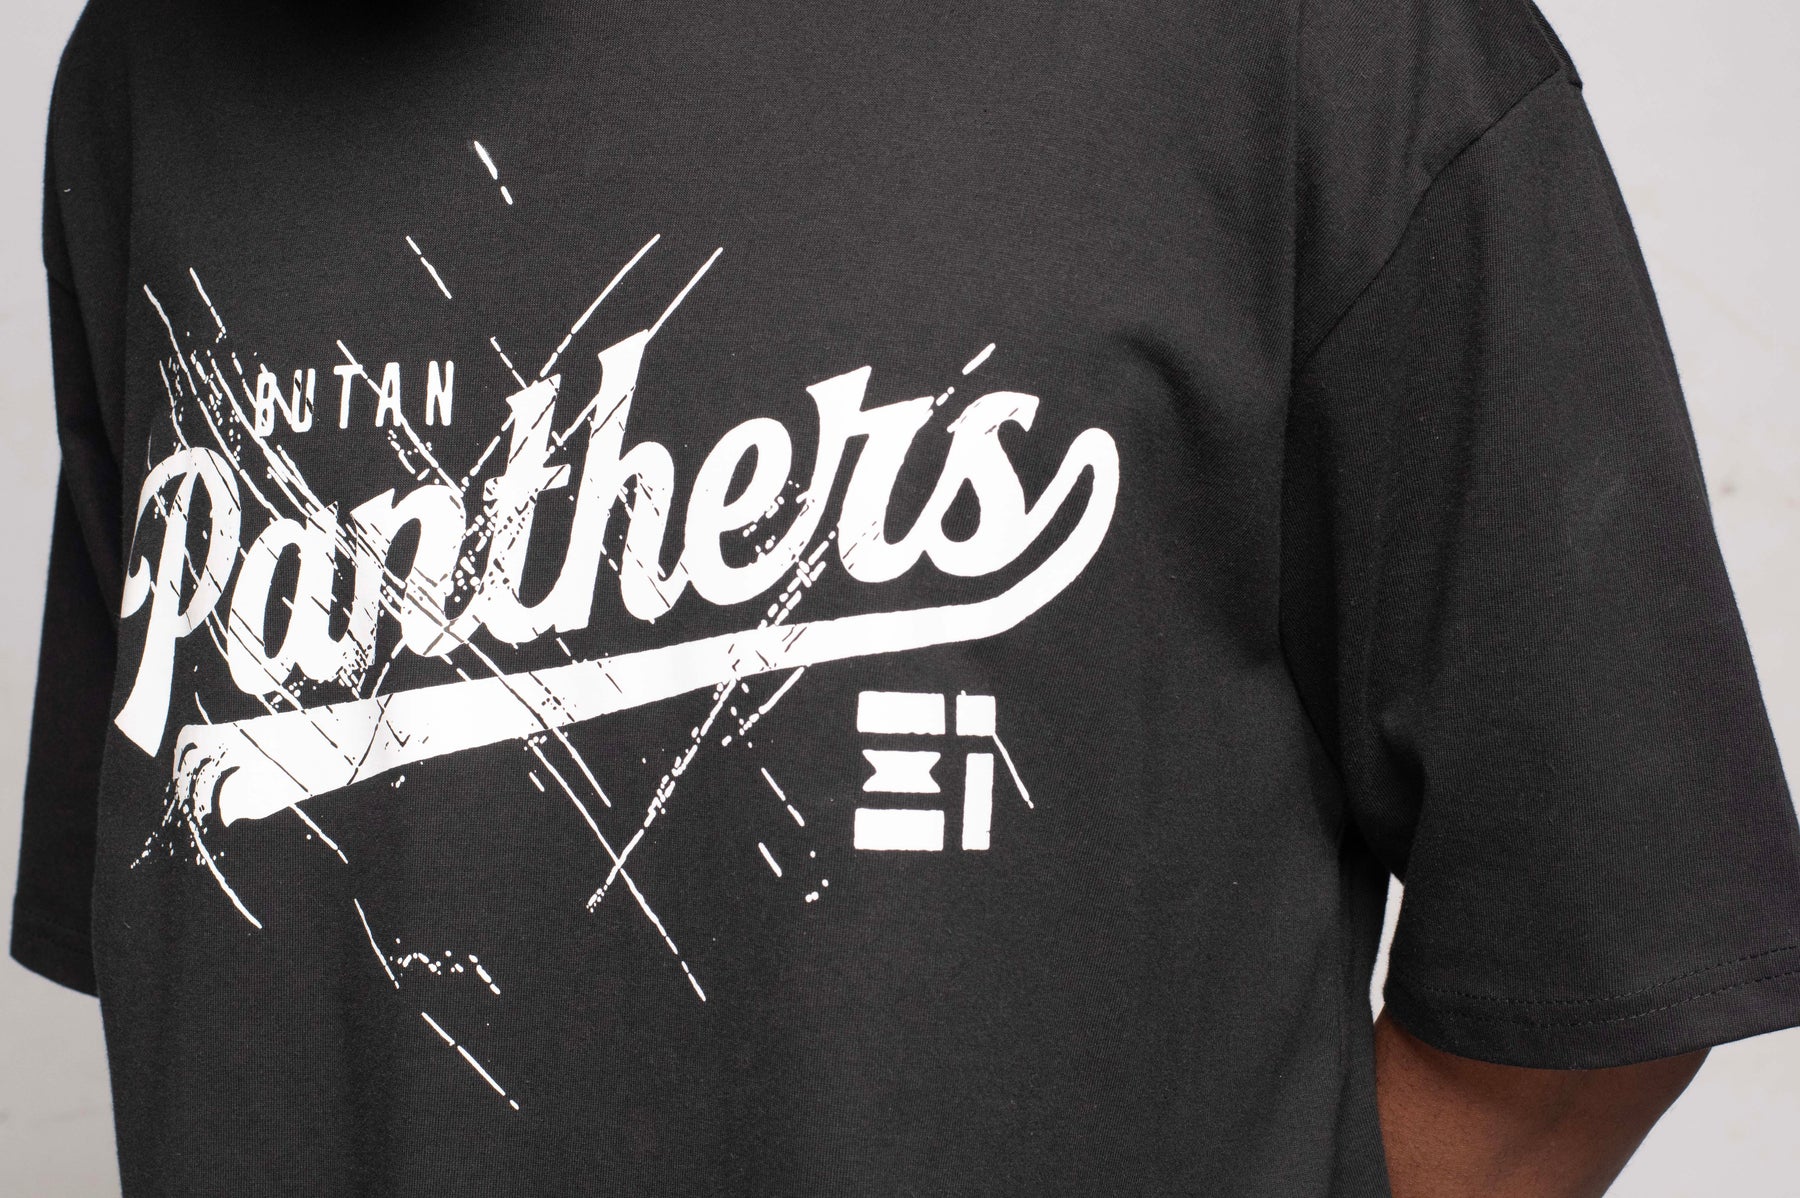 Butan Panthers | Clawed T-shirt